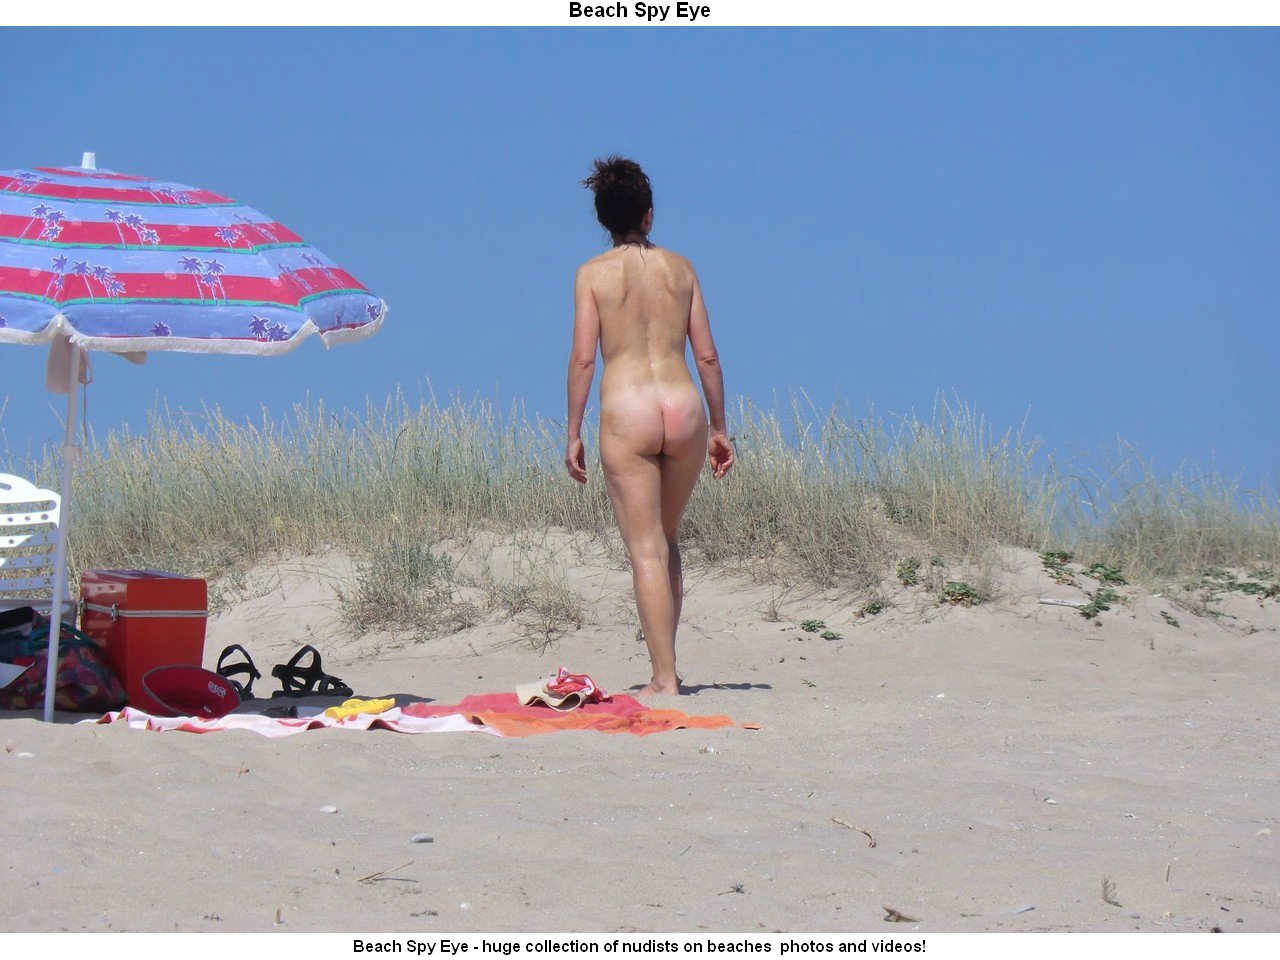 Nude Beaches Pics Nudist beach photos - obscene women nudists.. photography 5